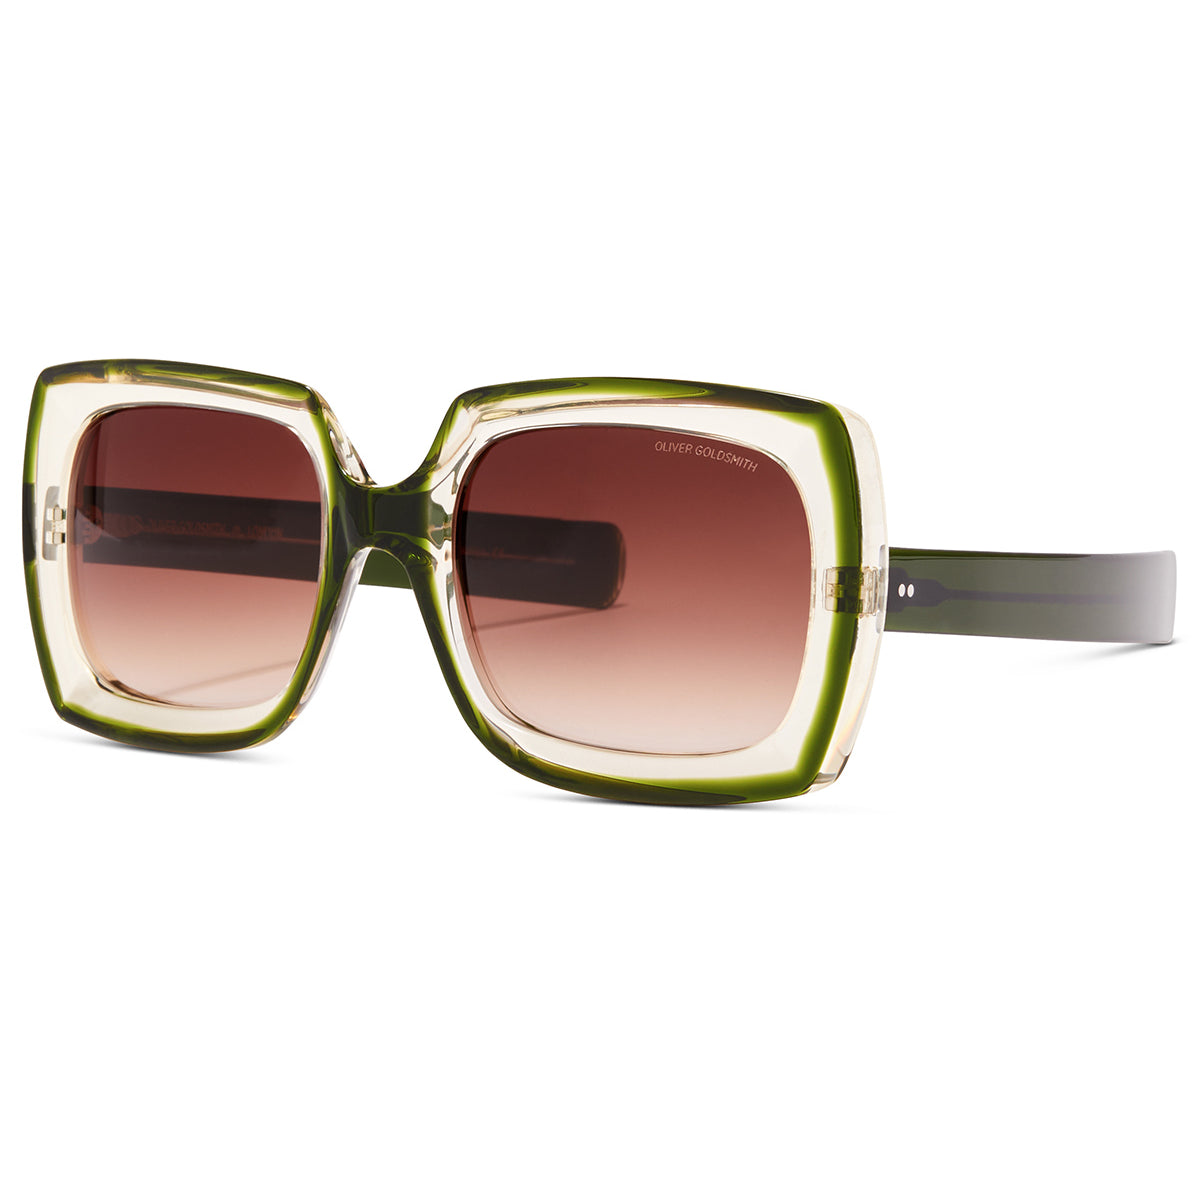 Fuz Sunglasses with Seafoam & Champagne acetate frame